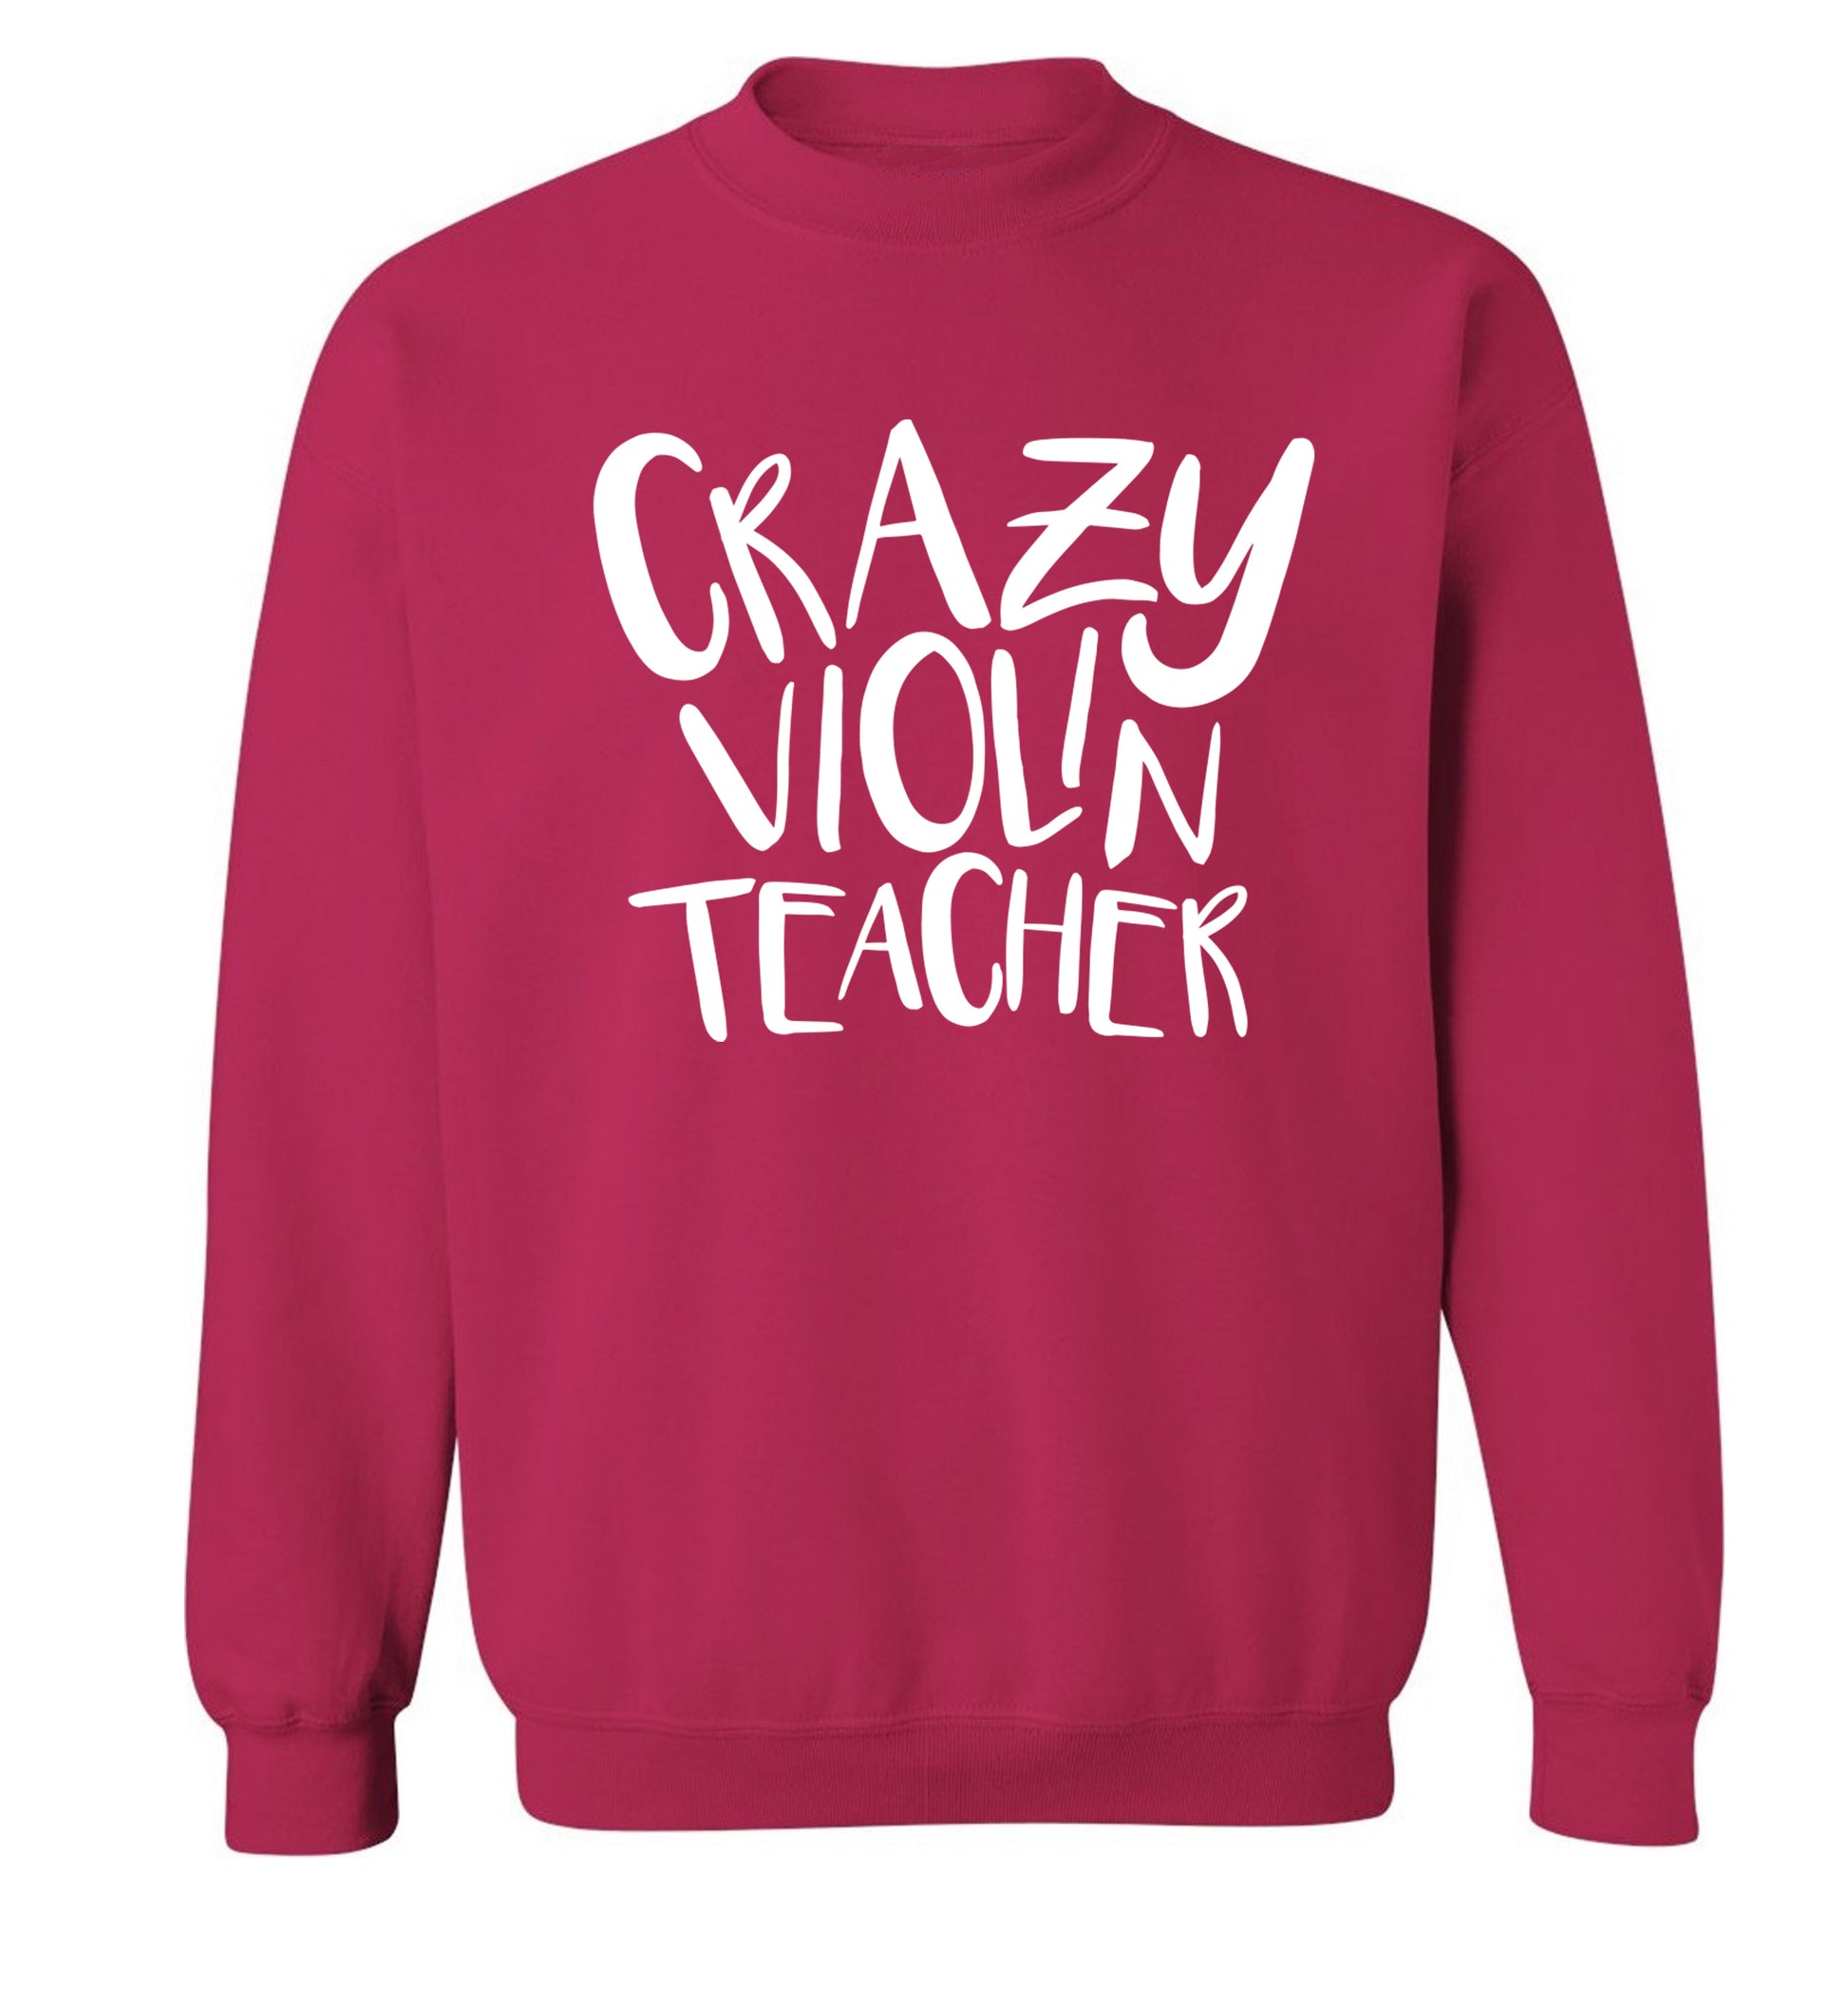 Crazy violin teacher Adult's unisex pink Sweater 2XL